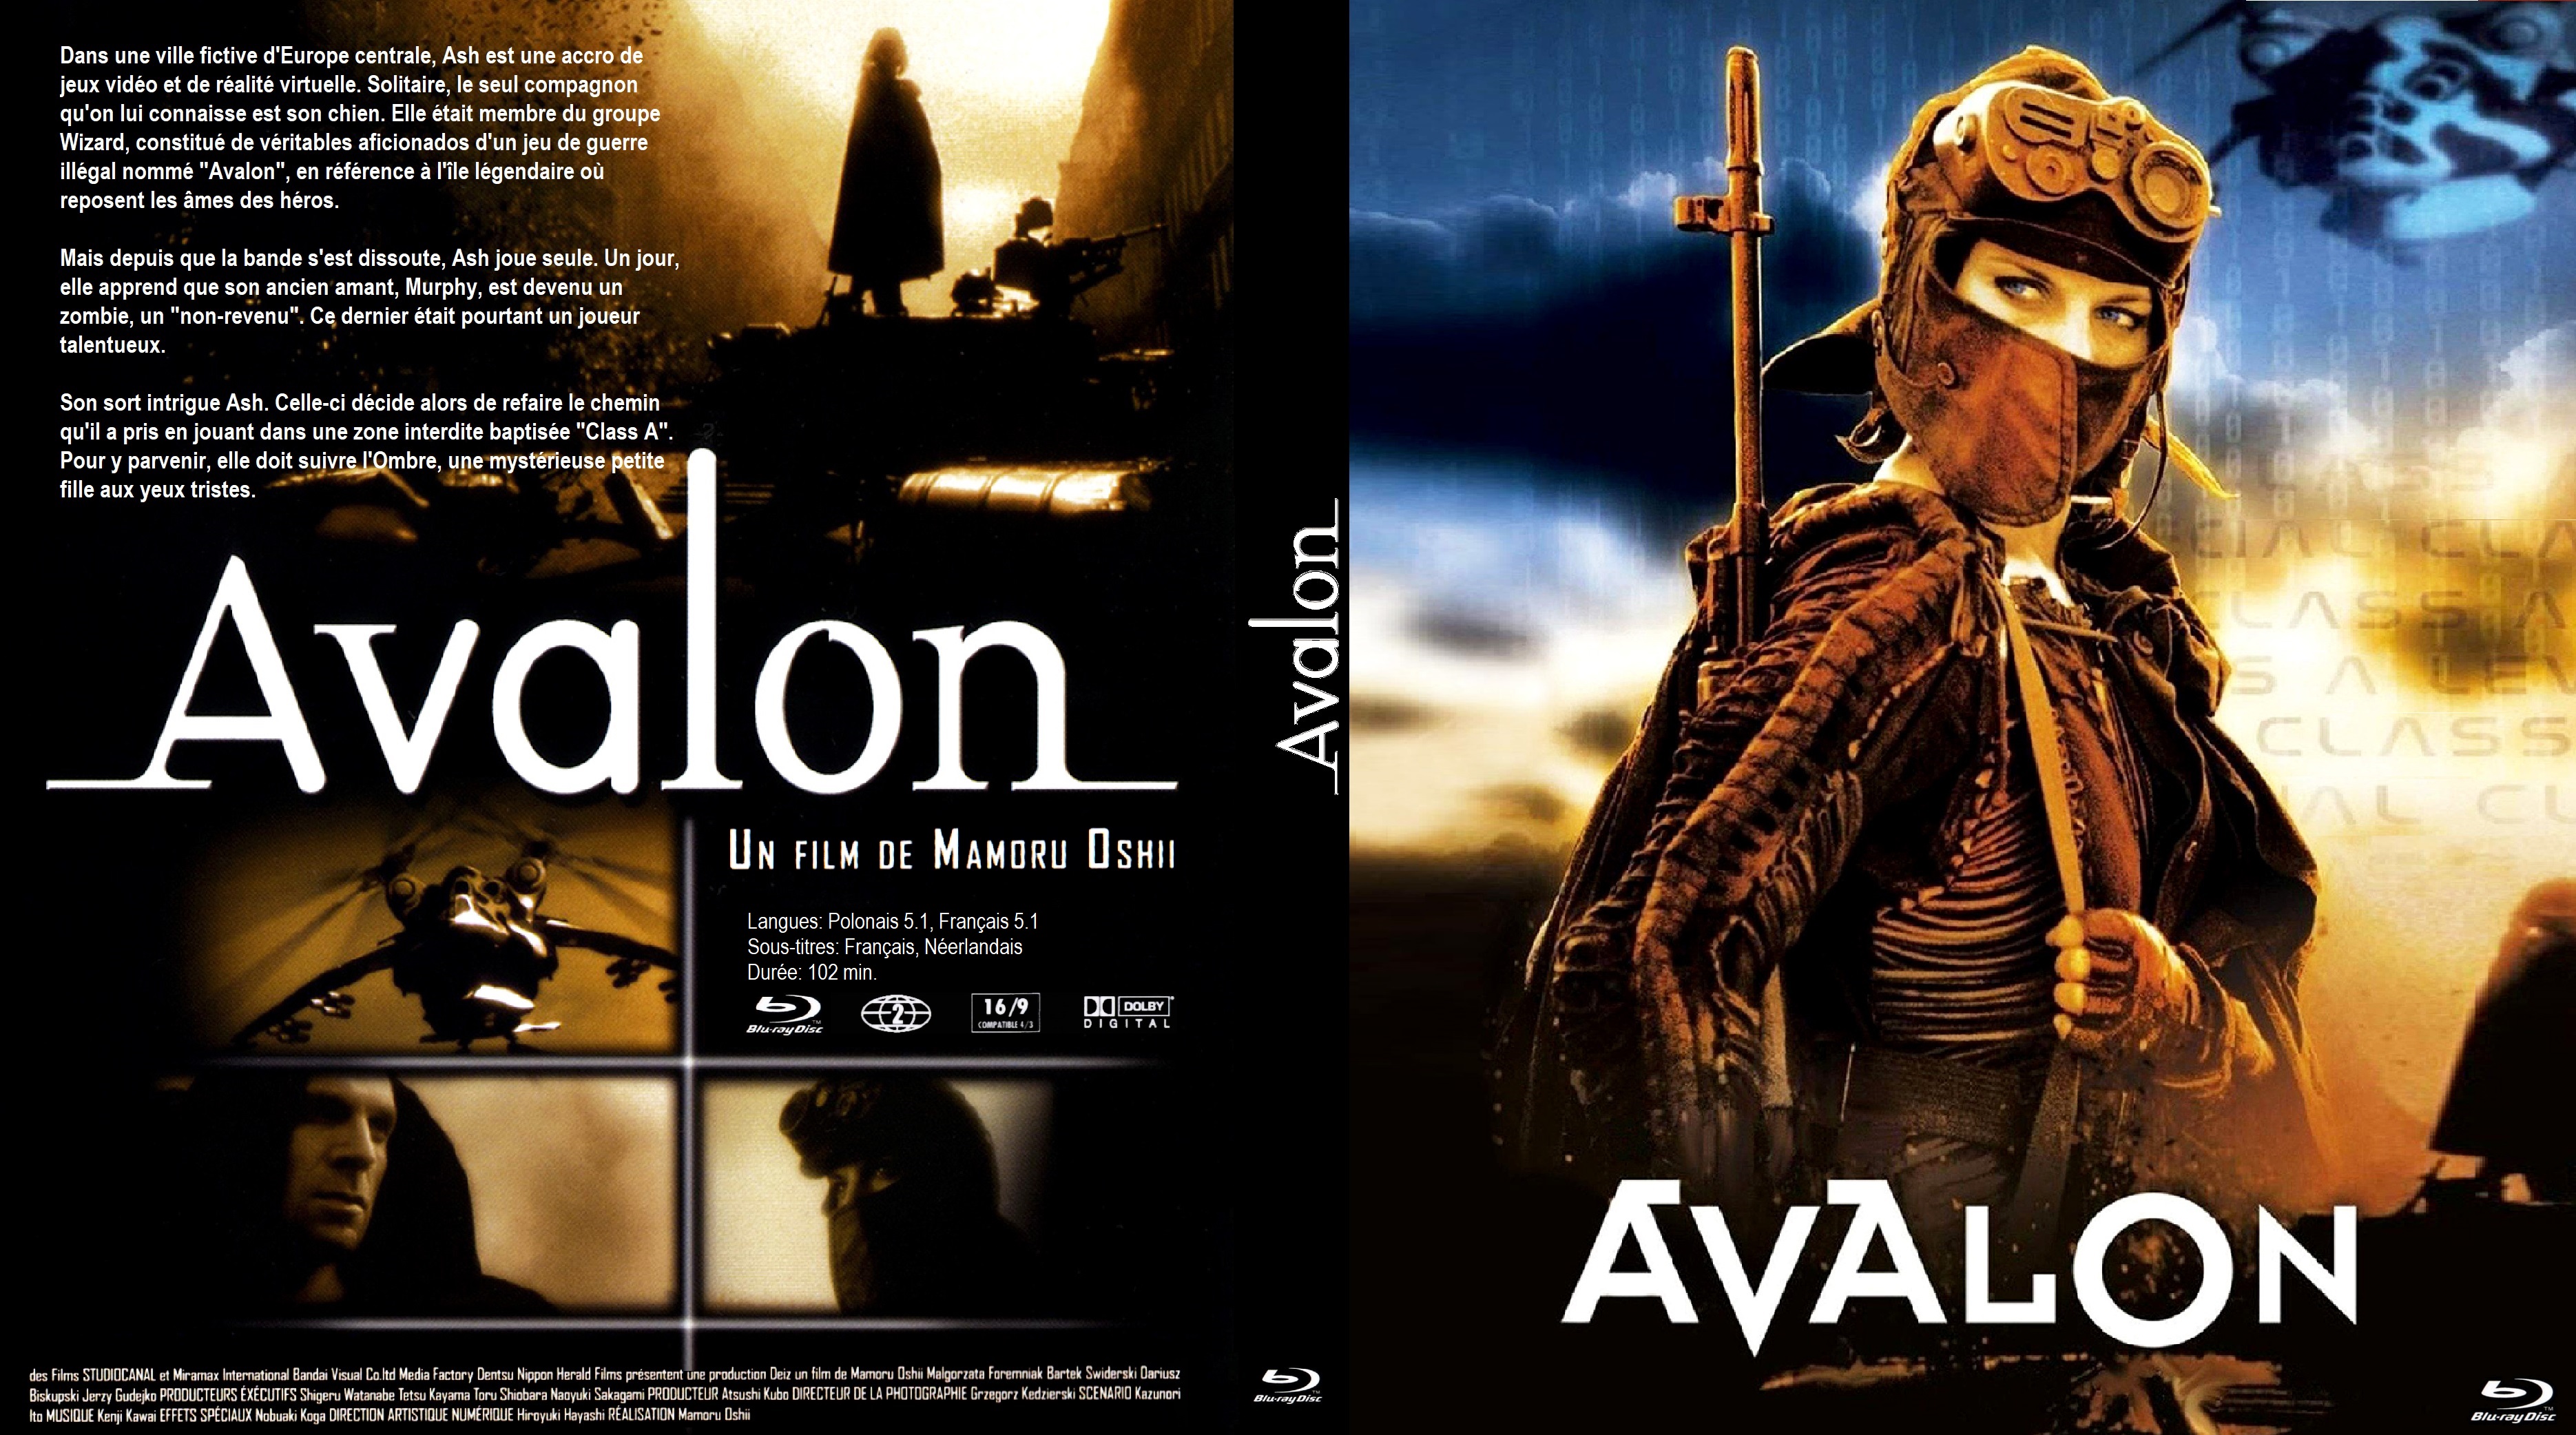 Jaquette DVD Avalon  BLU RAY custom